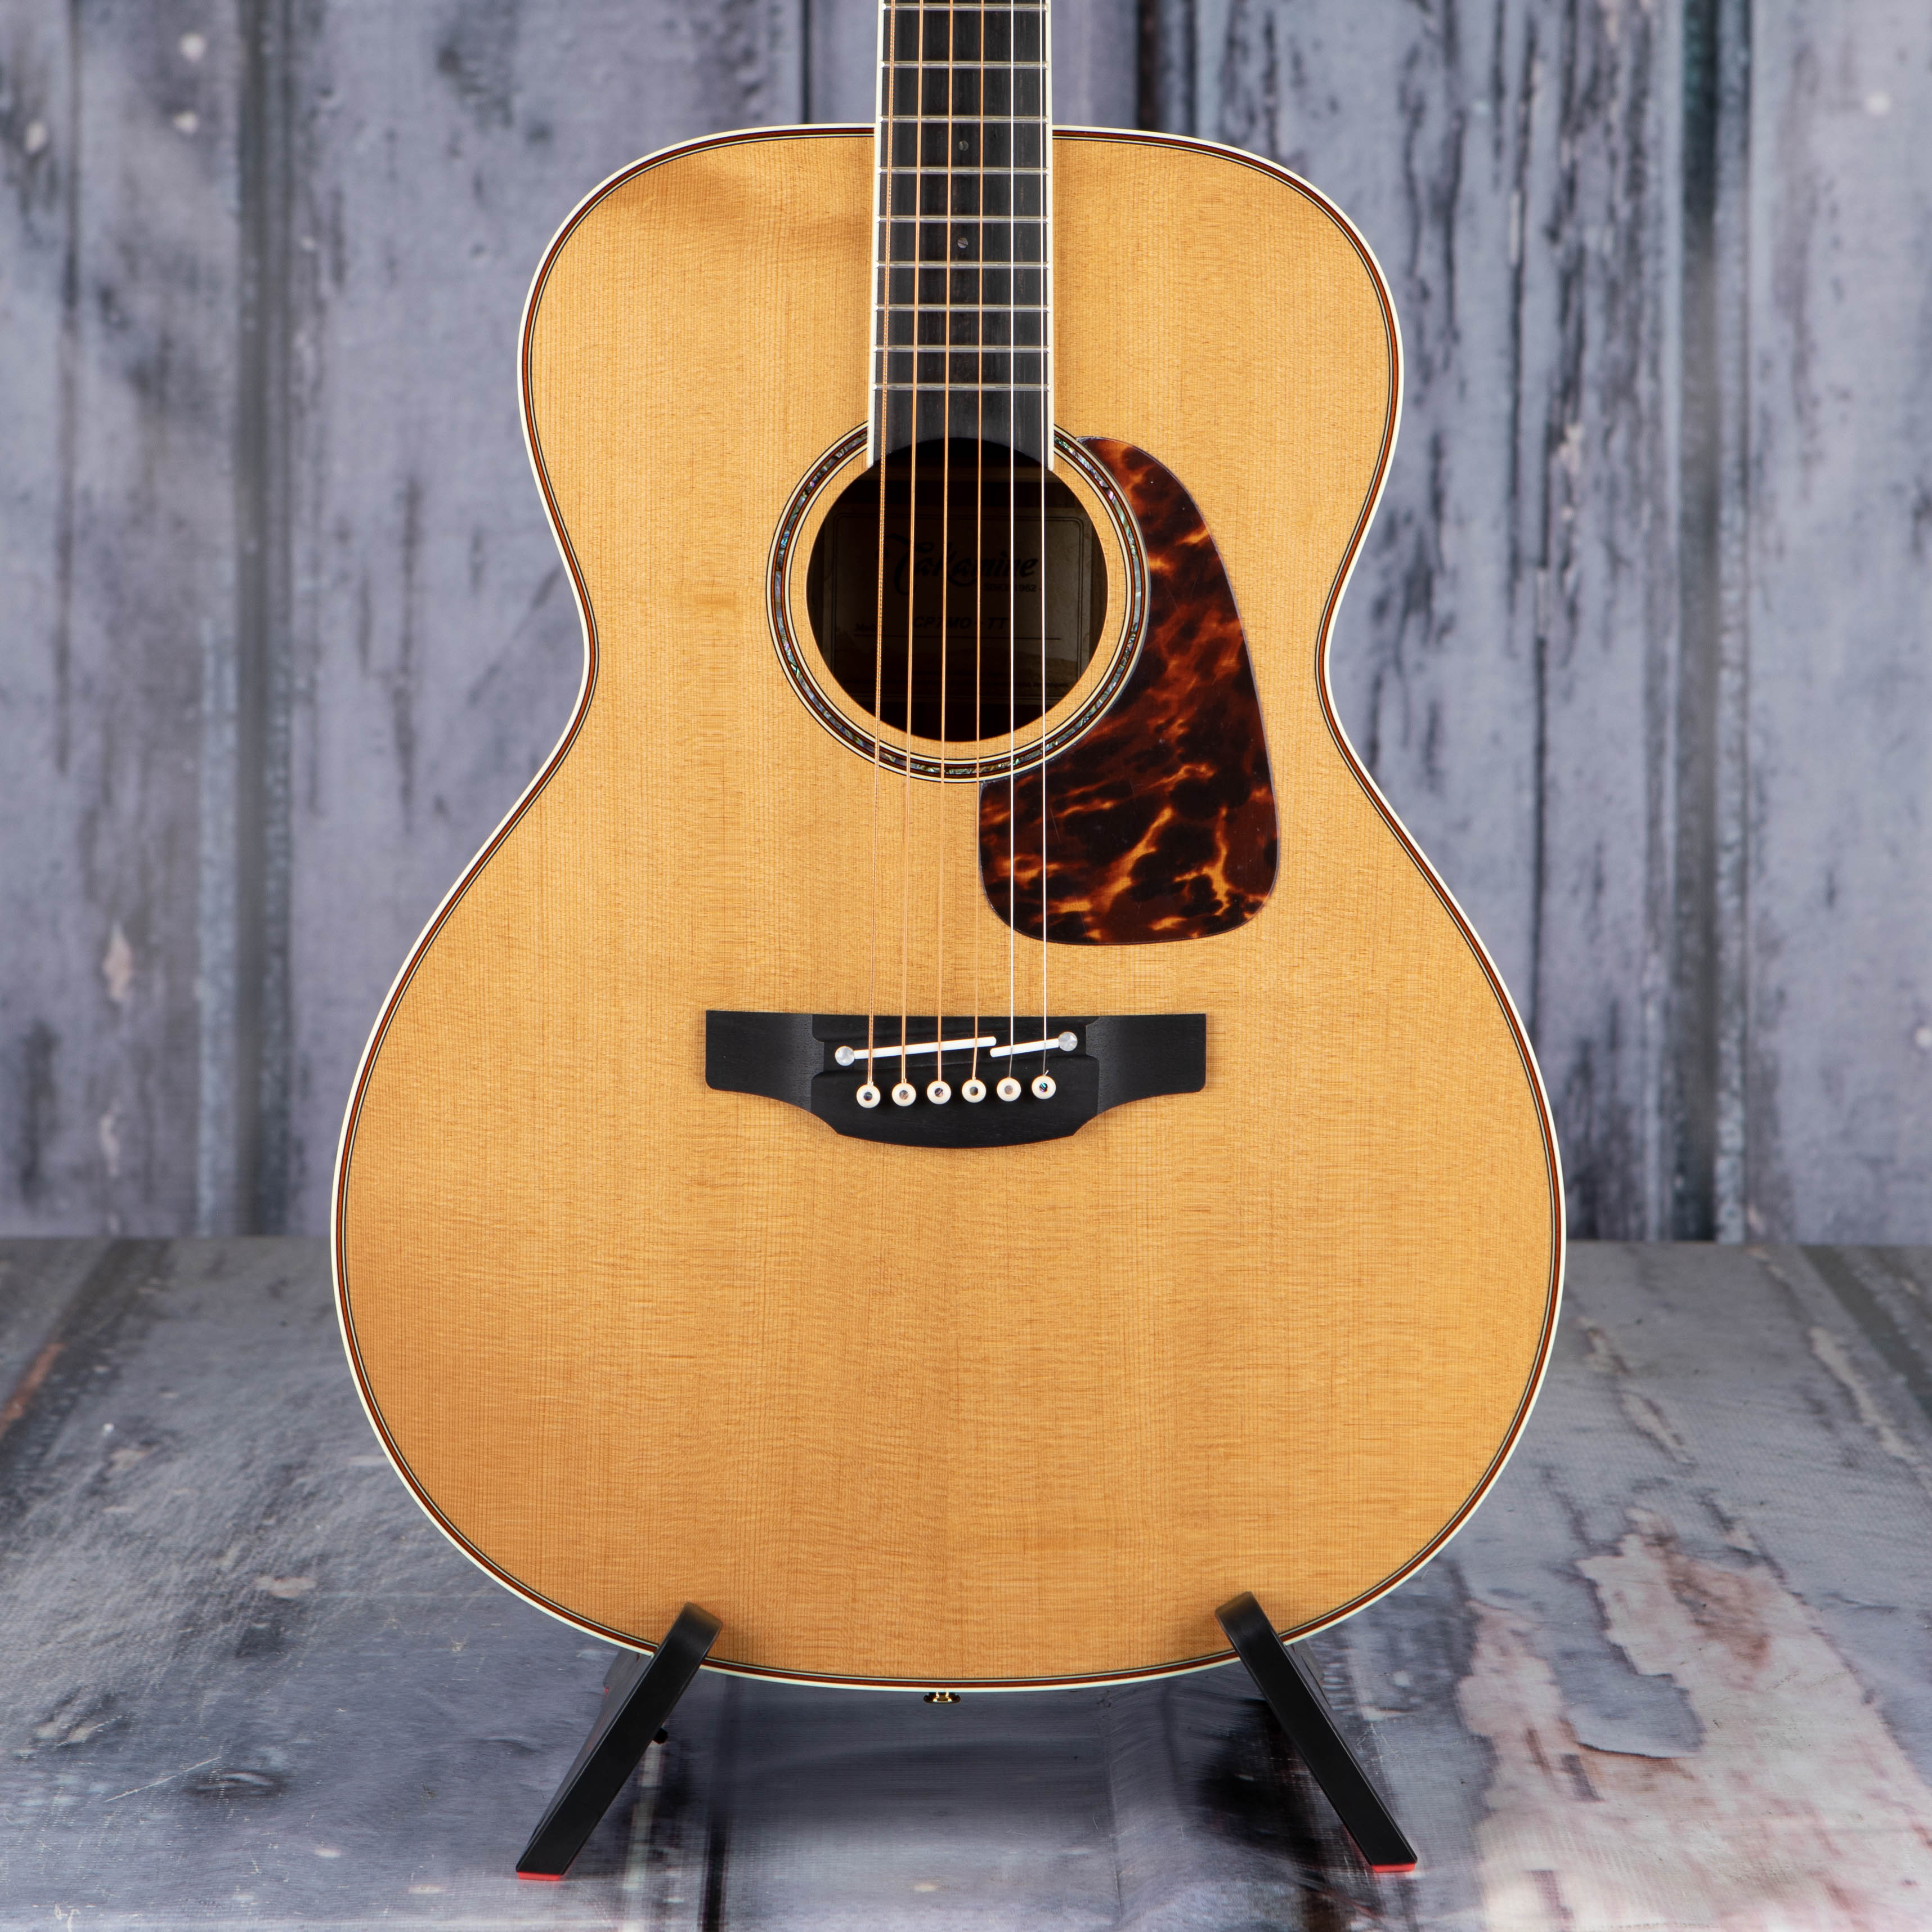 Takamine CP7MO-TT Acoustic/Electric Guitar, Natural Gloss, front closeup